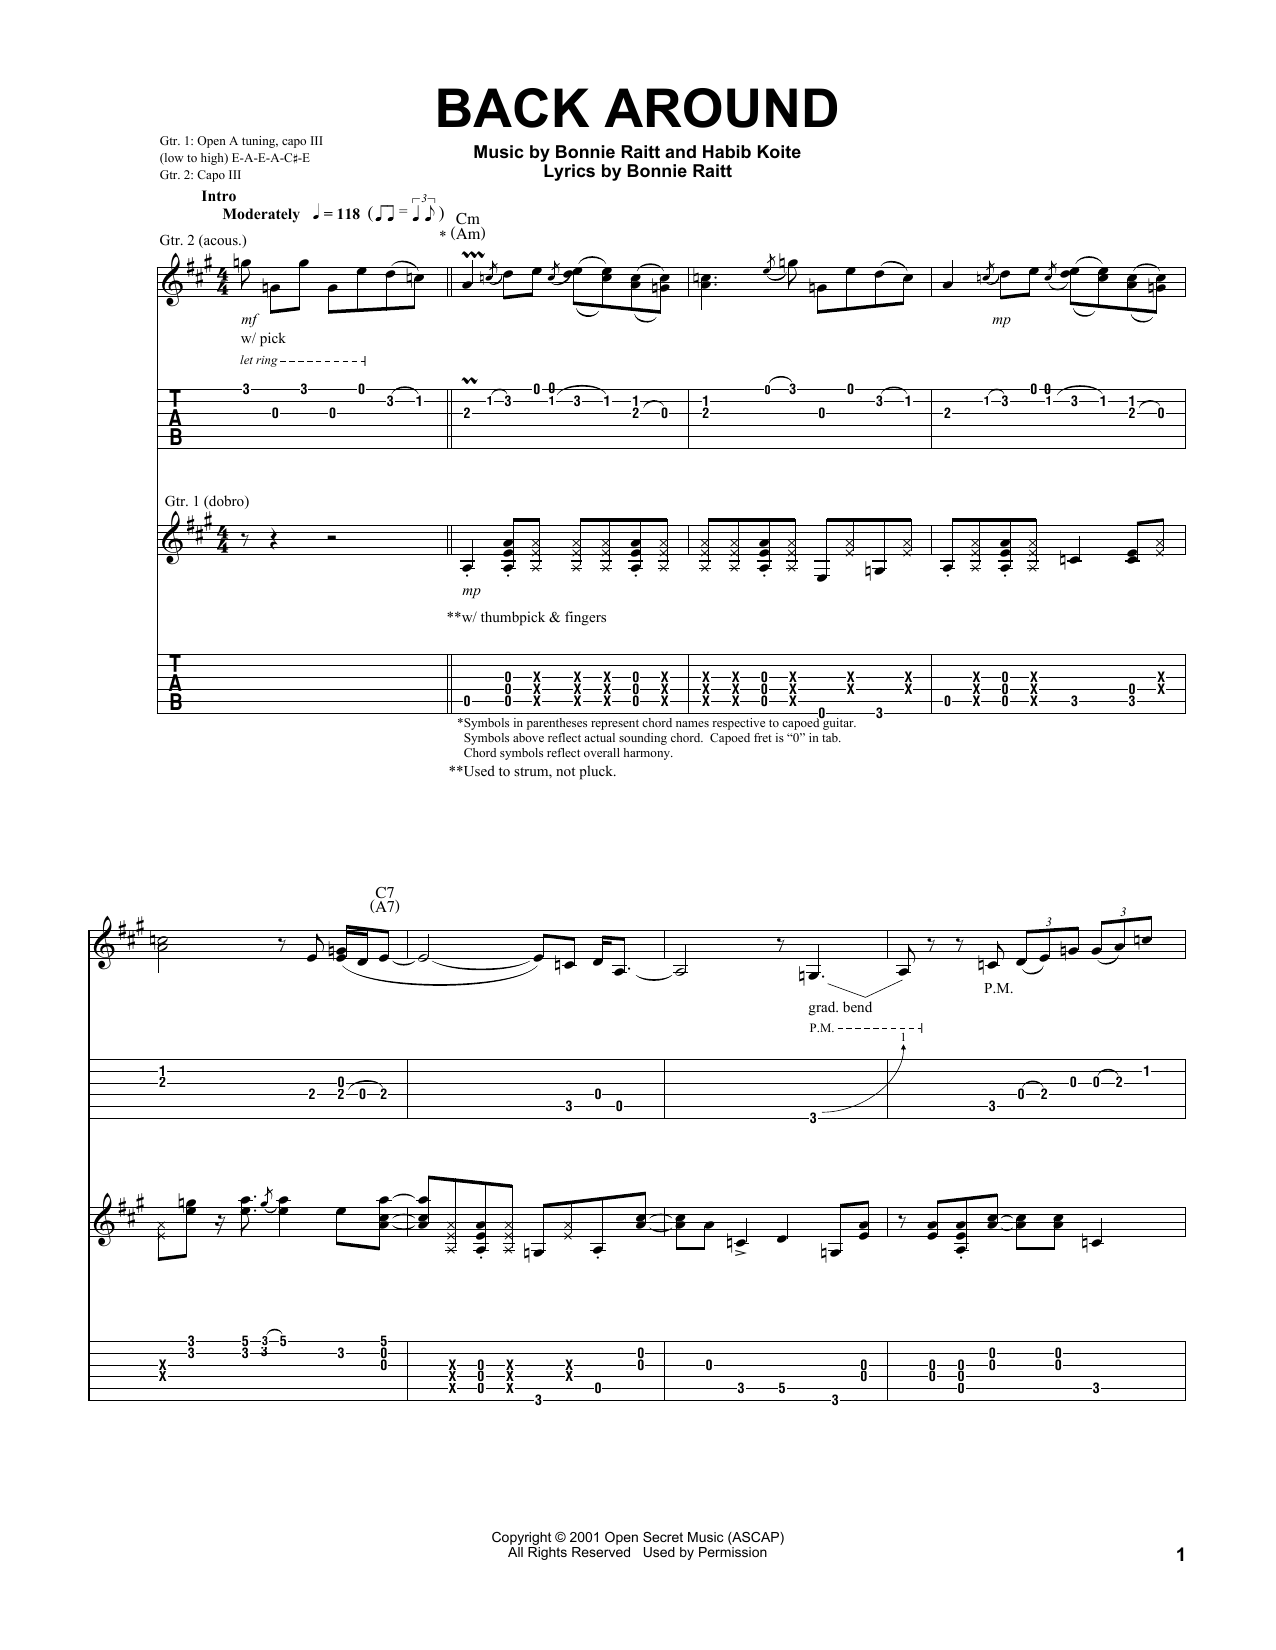 Bonnie Raitt Back Around sheet music notes and chords arranged for Guitar Tab